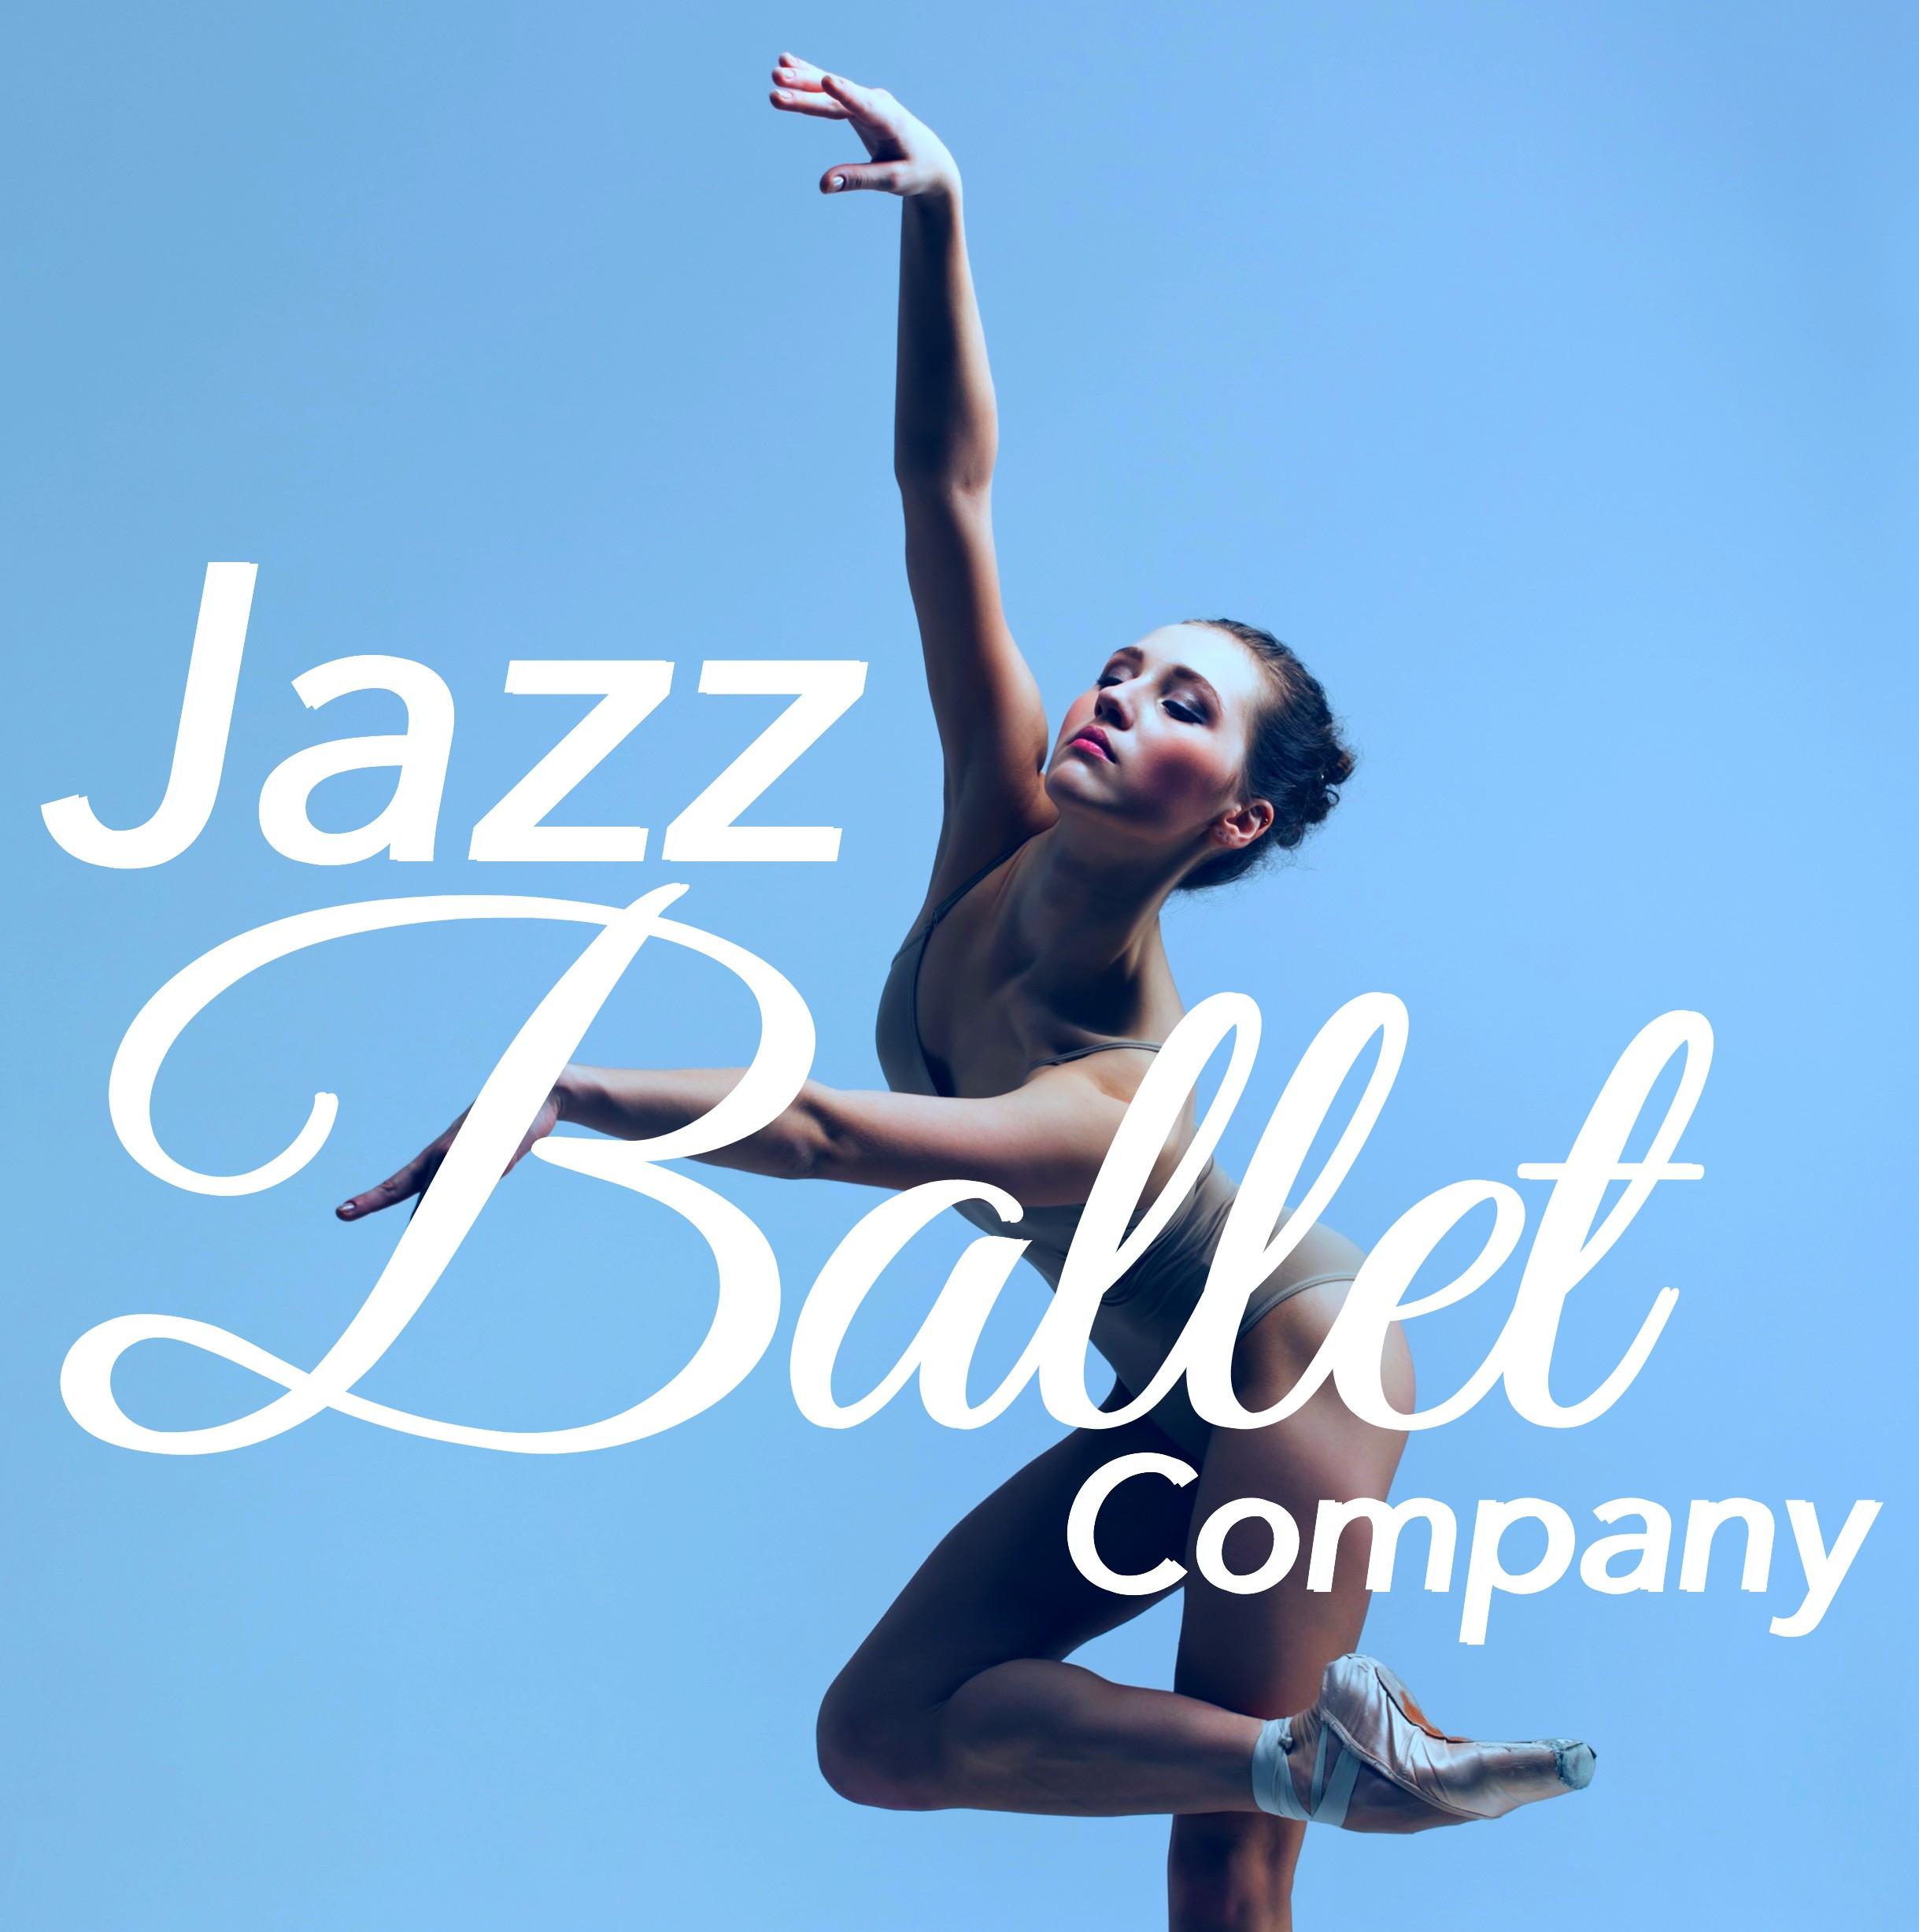 Jazz Ballet Company - Piano Solo for Ballet Course, Jazz, Contemporain and Classic Ballet